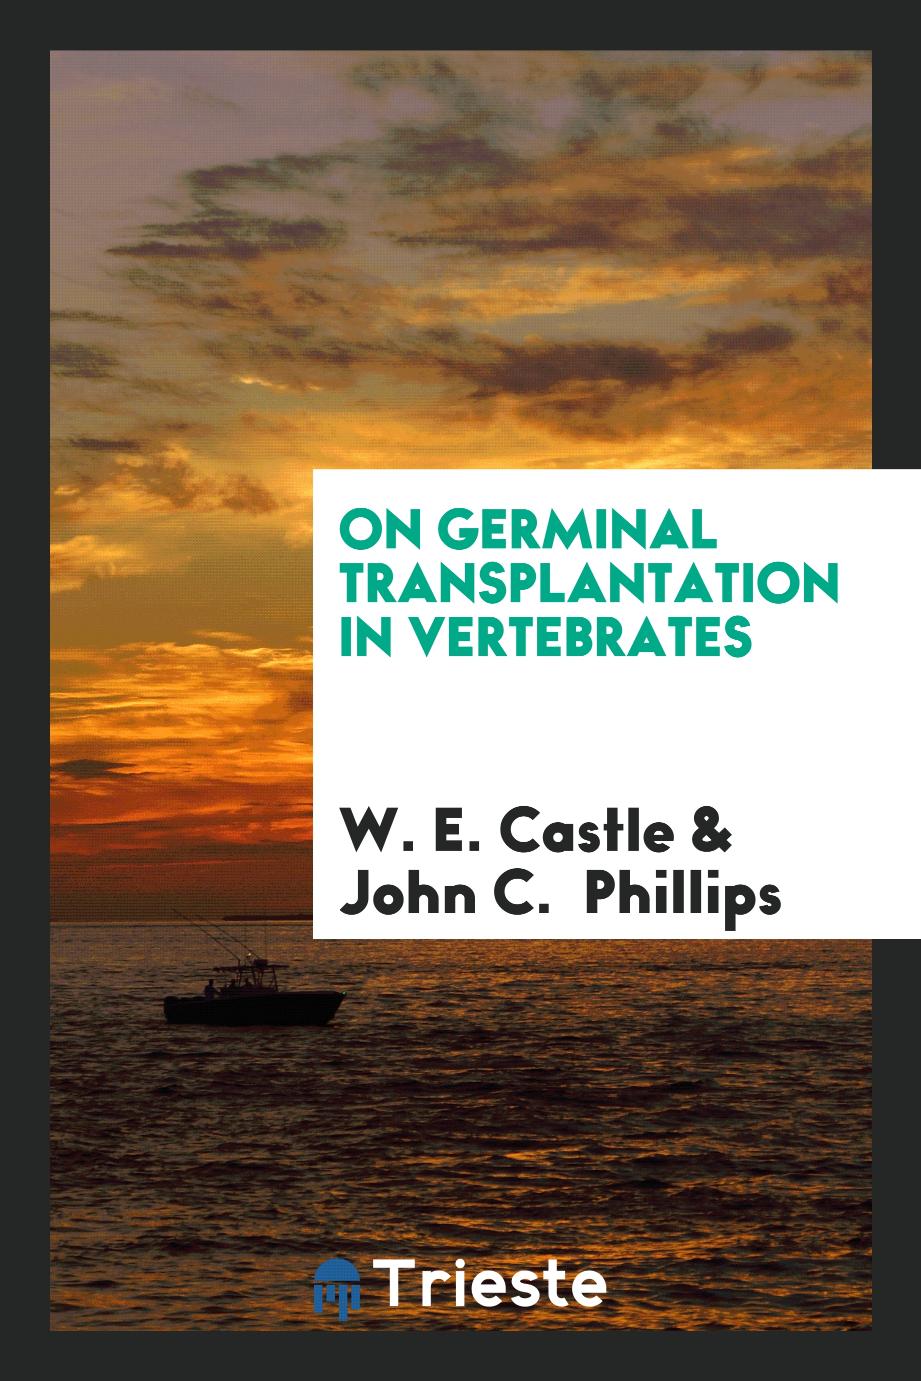 On Germinal transplantation in vertebrates